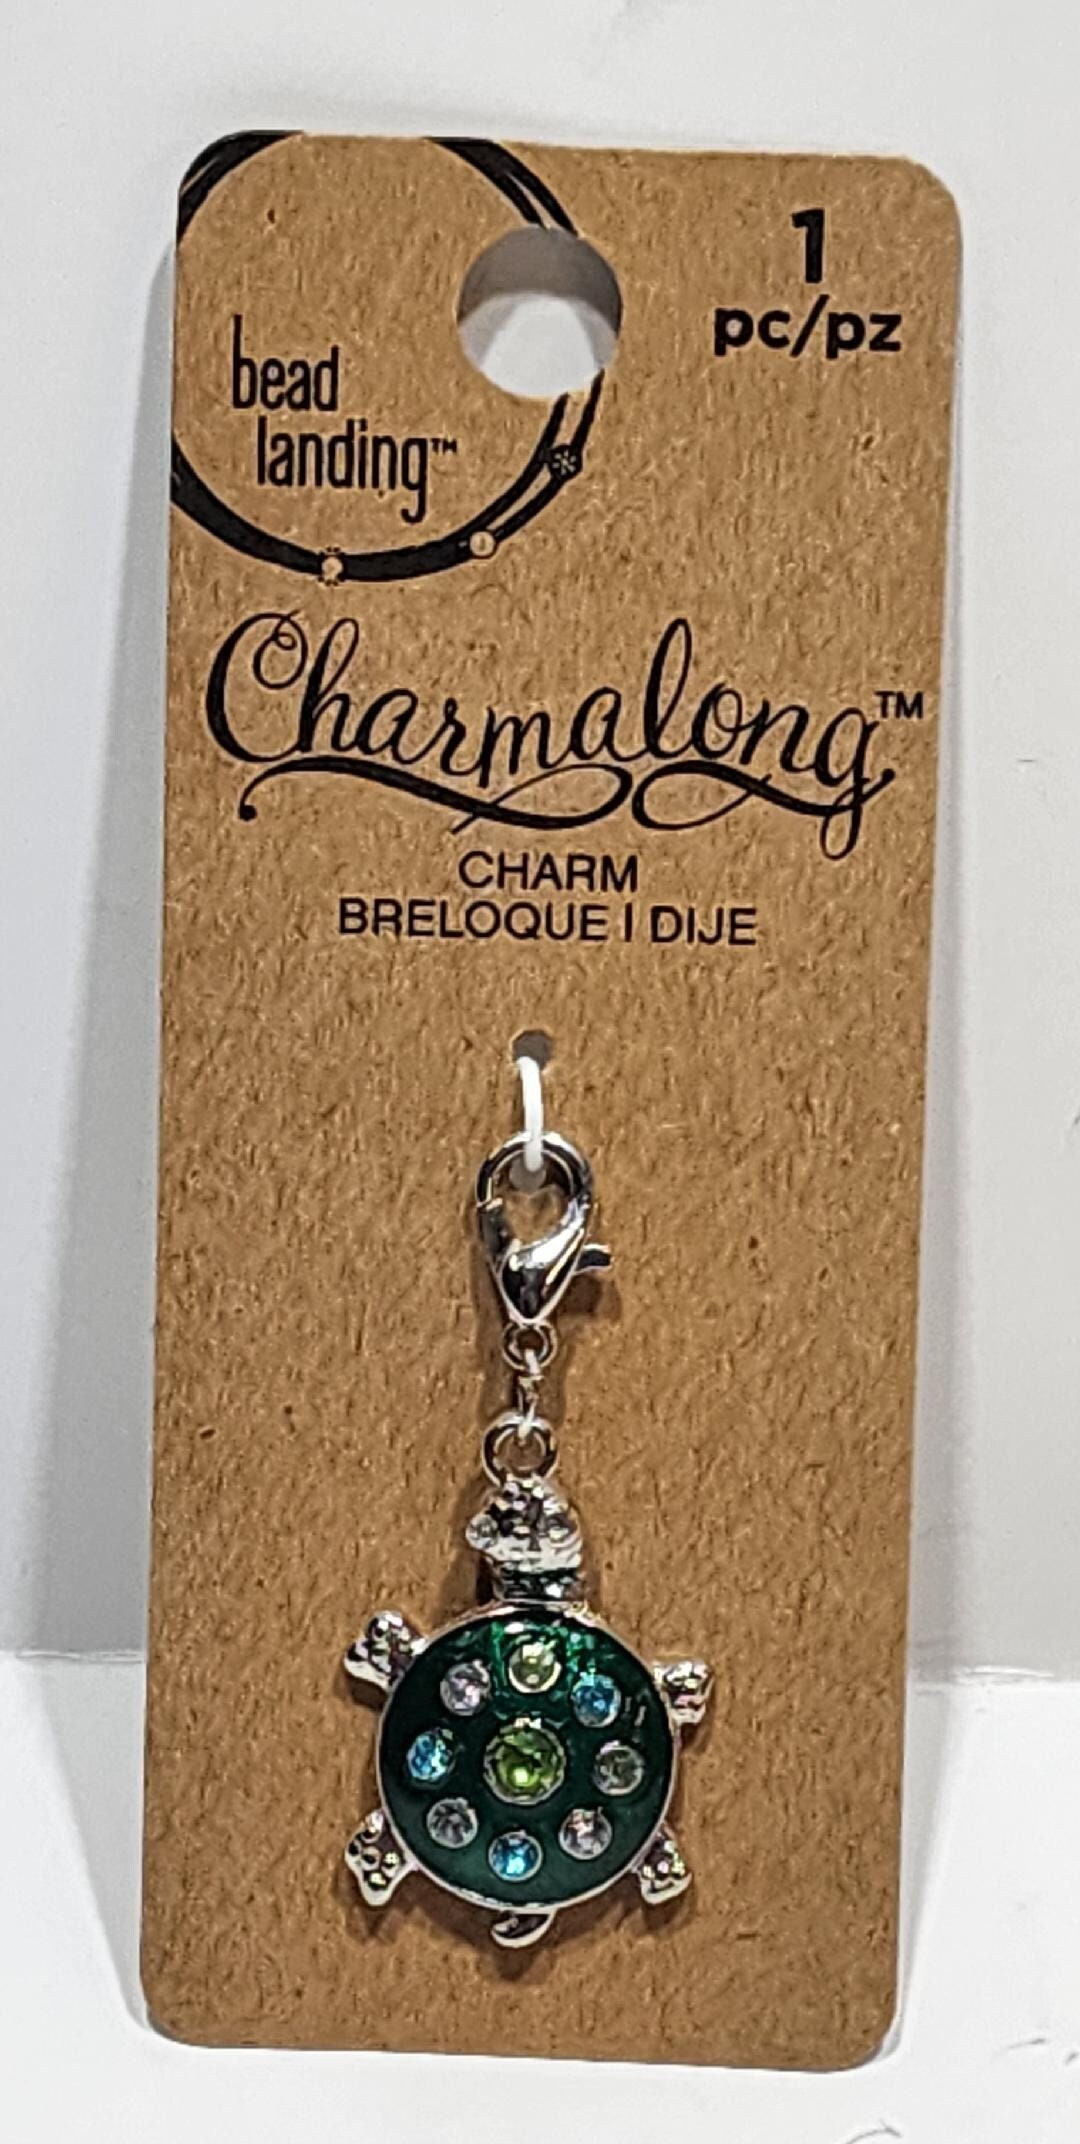 Charmalong™ Metal Cross Charms by Bead Landing™